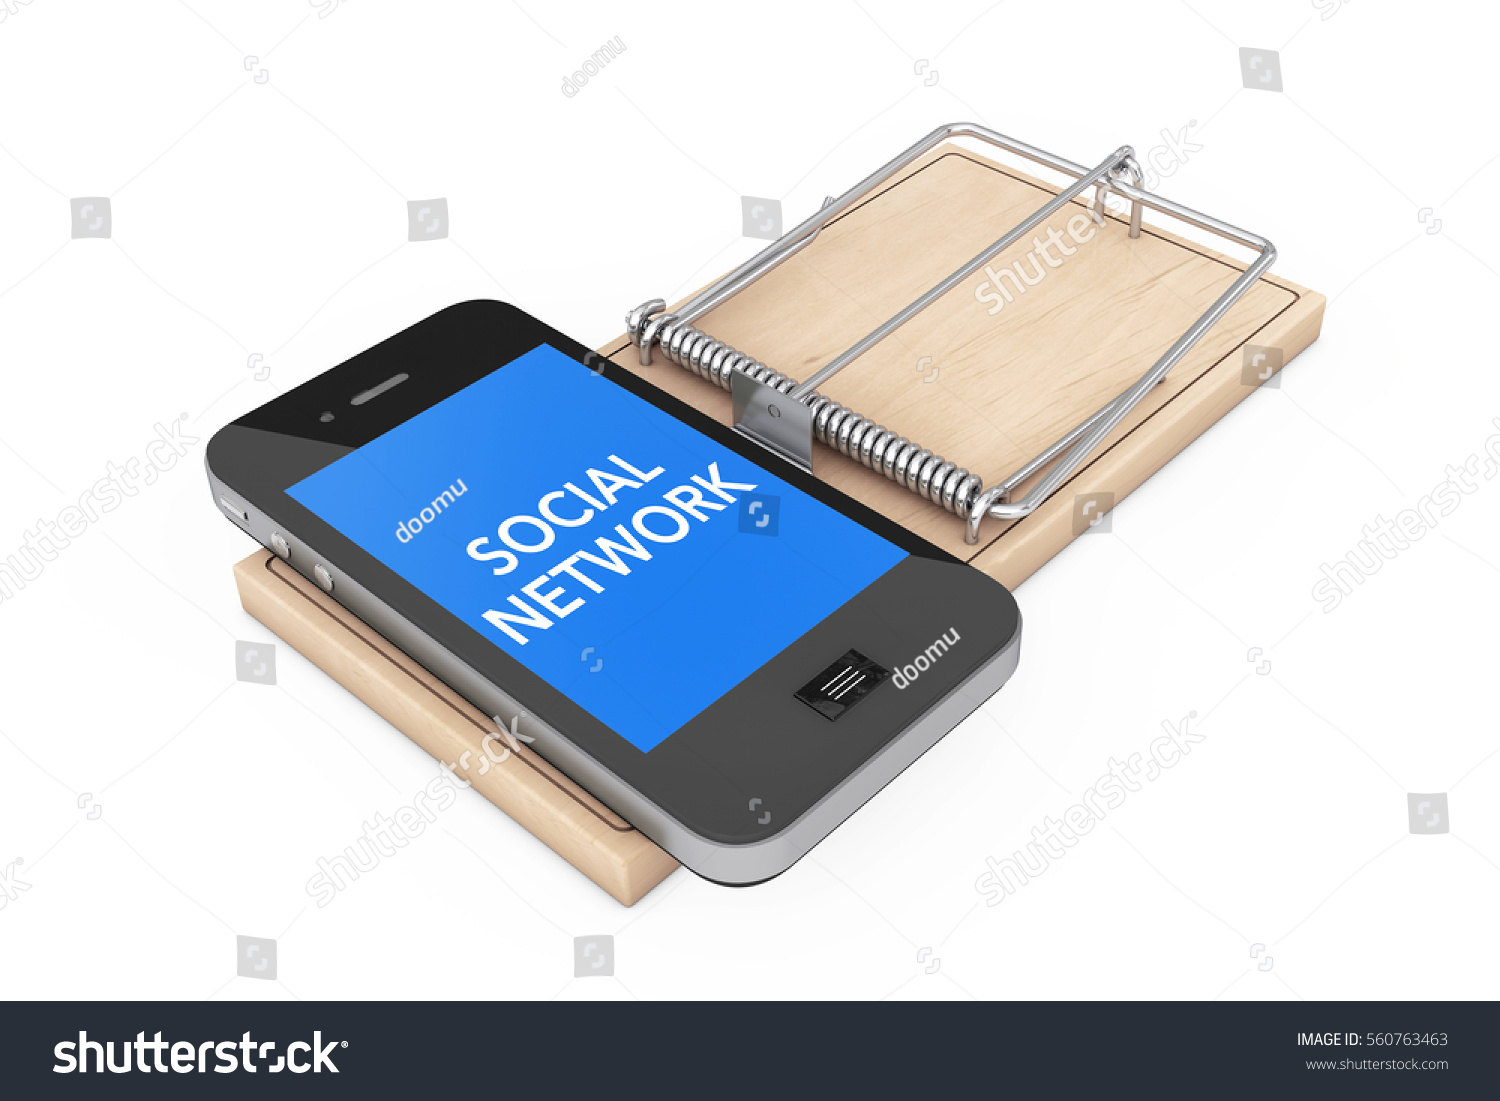 Sns依存のコンセプト 白い背景に携帯電話 木のマウストラップ 3dレンダリング のイラスト素材